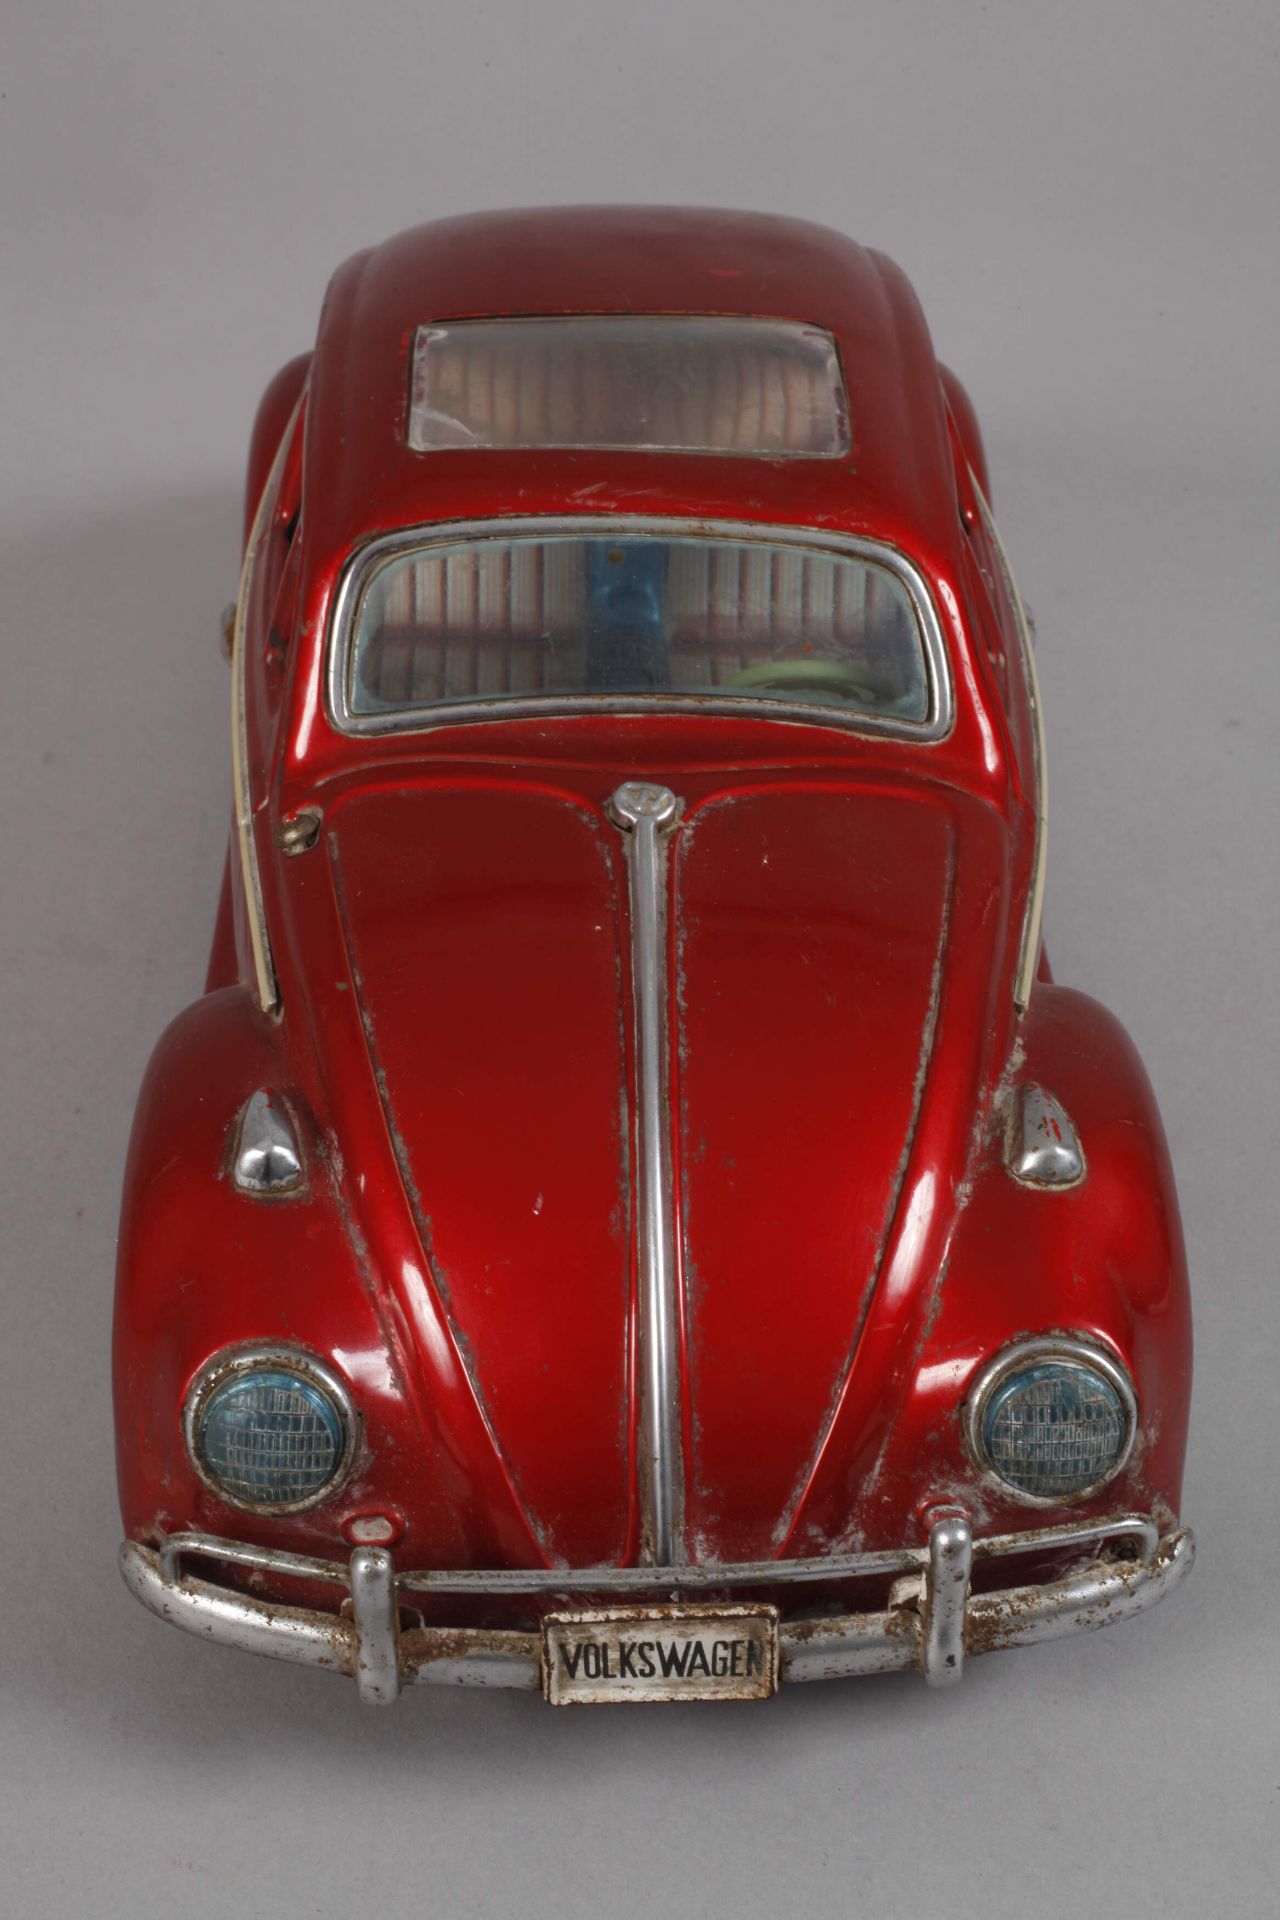 Bandai VW Beetle - Image 2 of 5